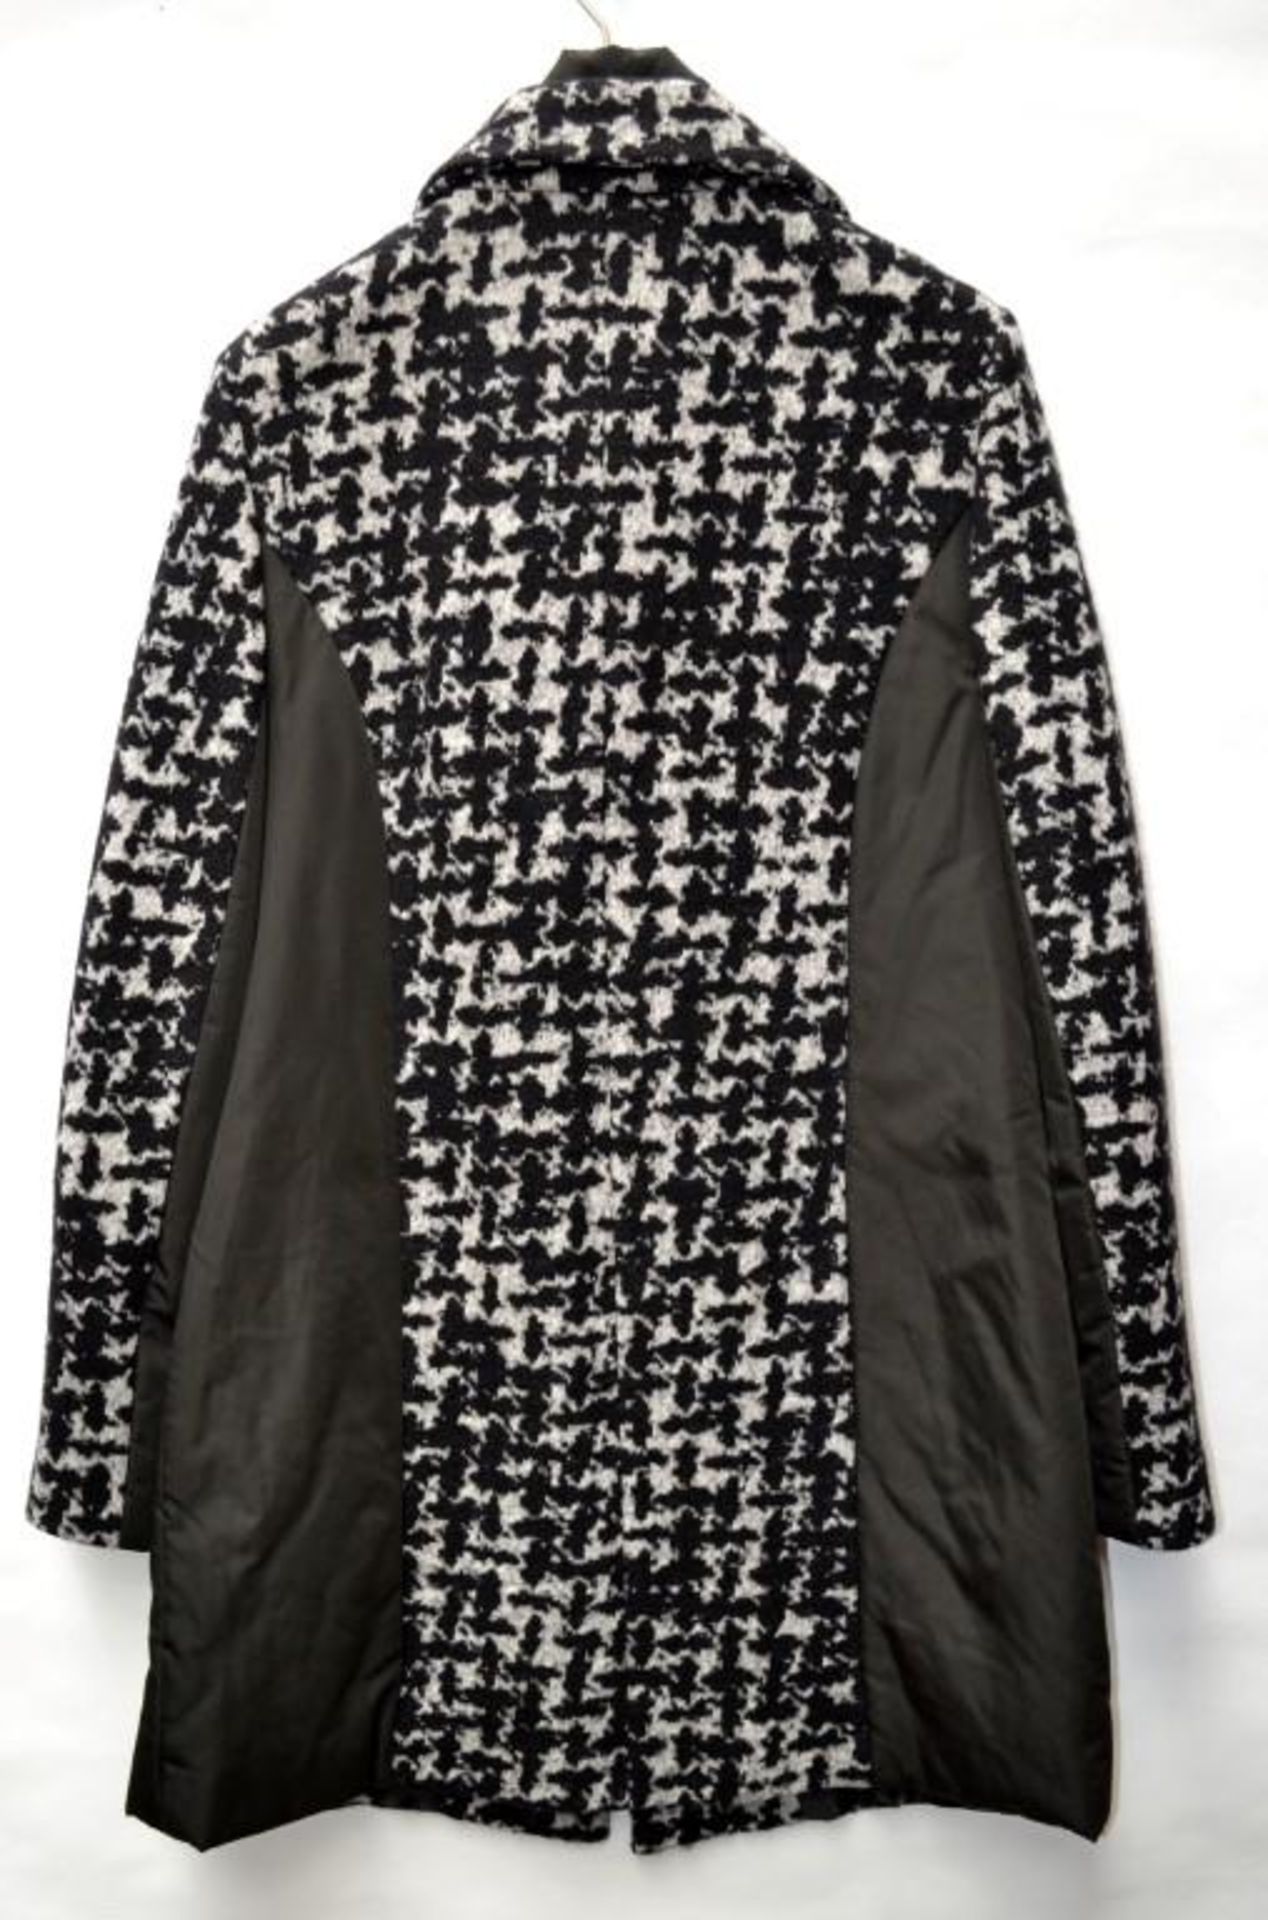 1 x Steilmann KSTN By Kirsten Womens Winter Coat - Wool/Cotton Blend Coat Featuring An Oversized Hou - Image 5 of 6